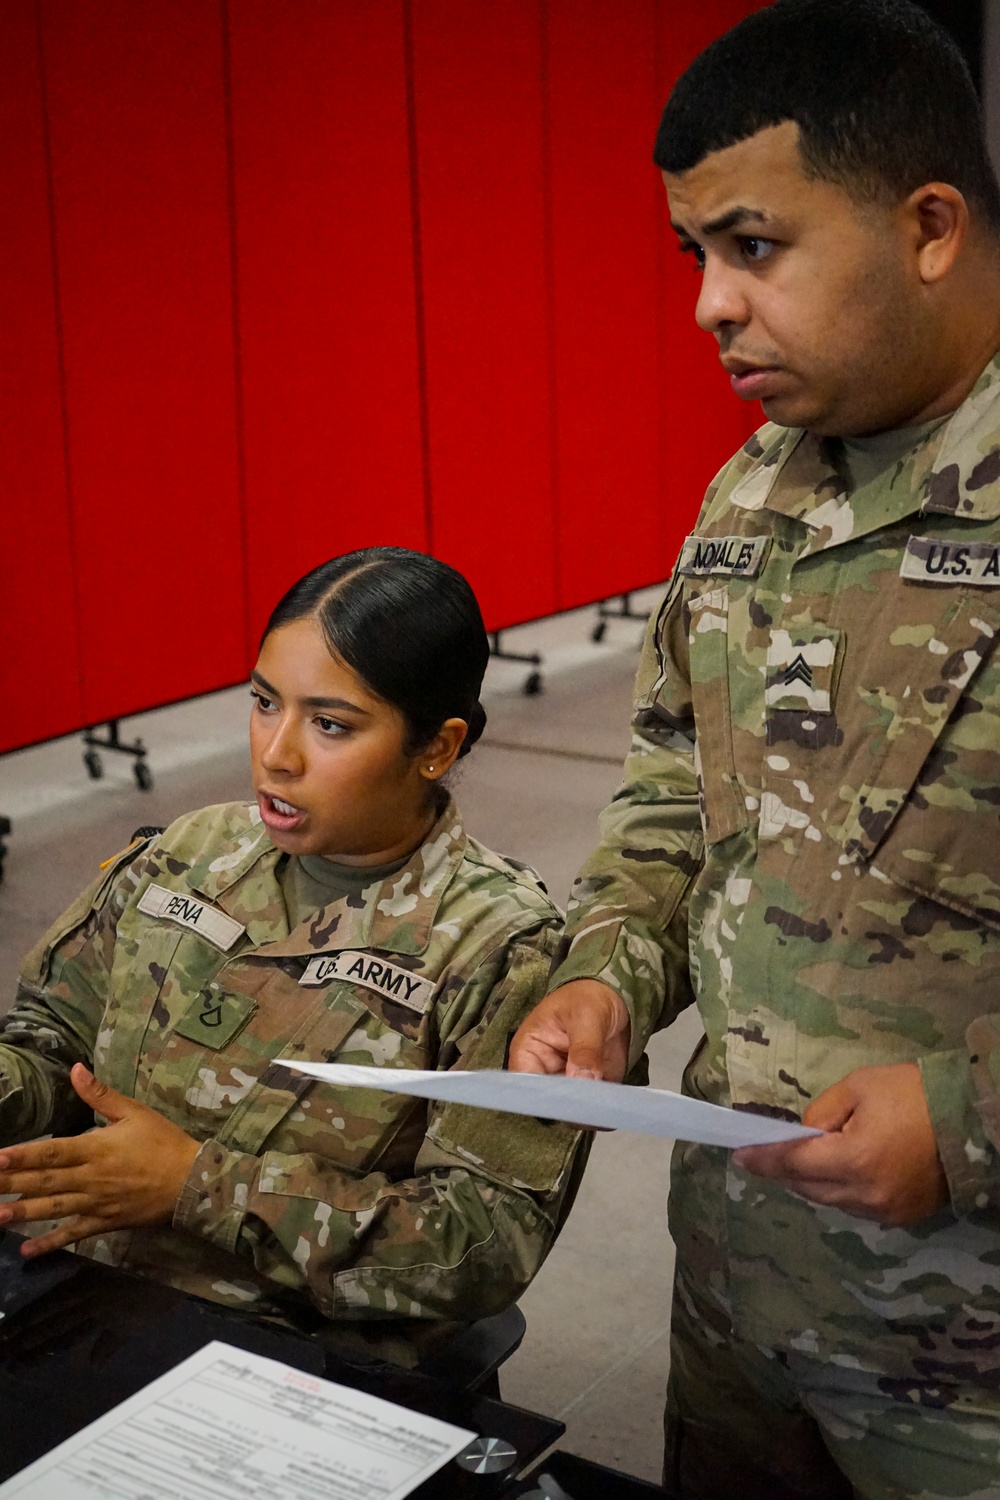 1-374 FMSD Conducting Training on North Ft. Cavazos